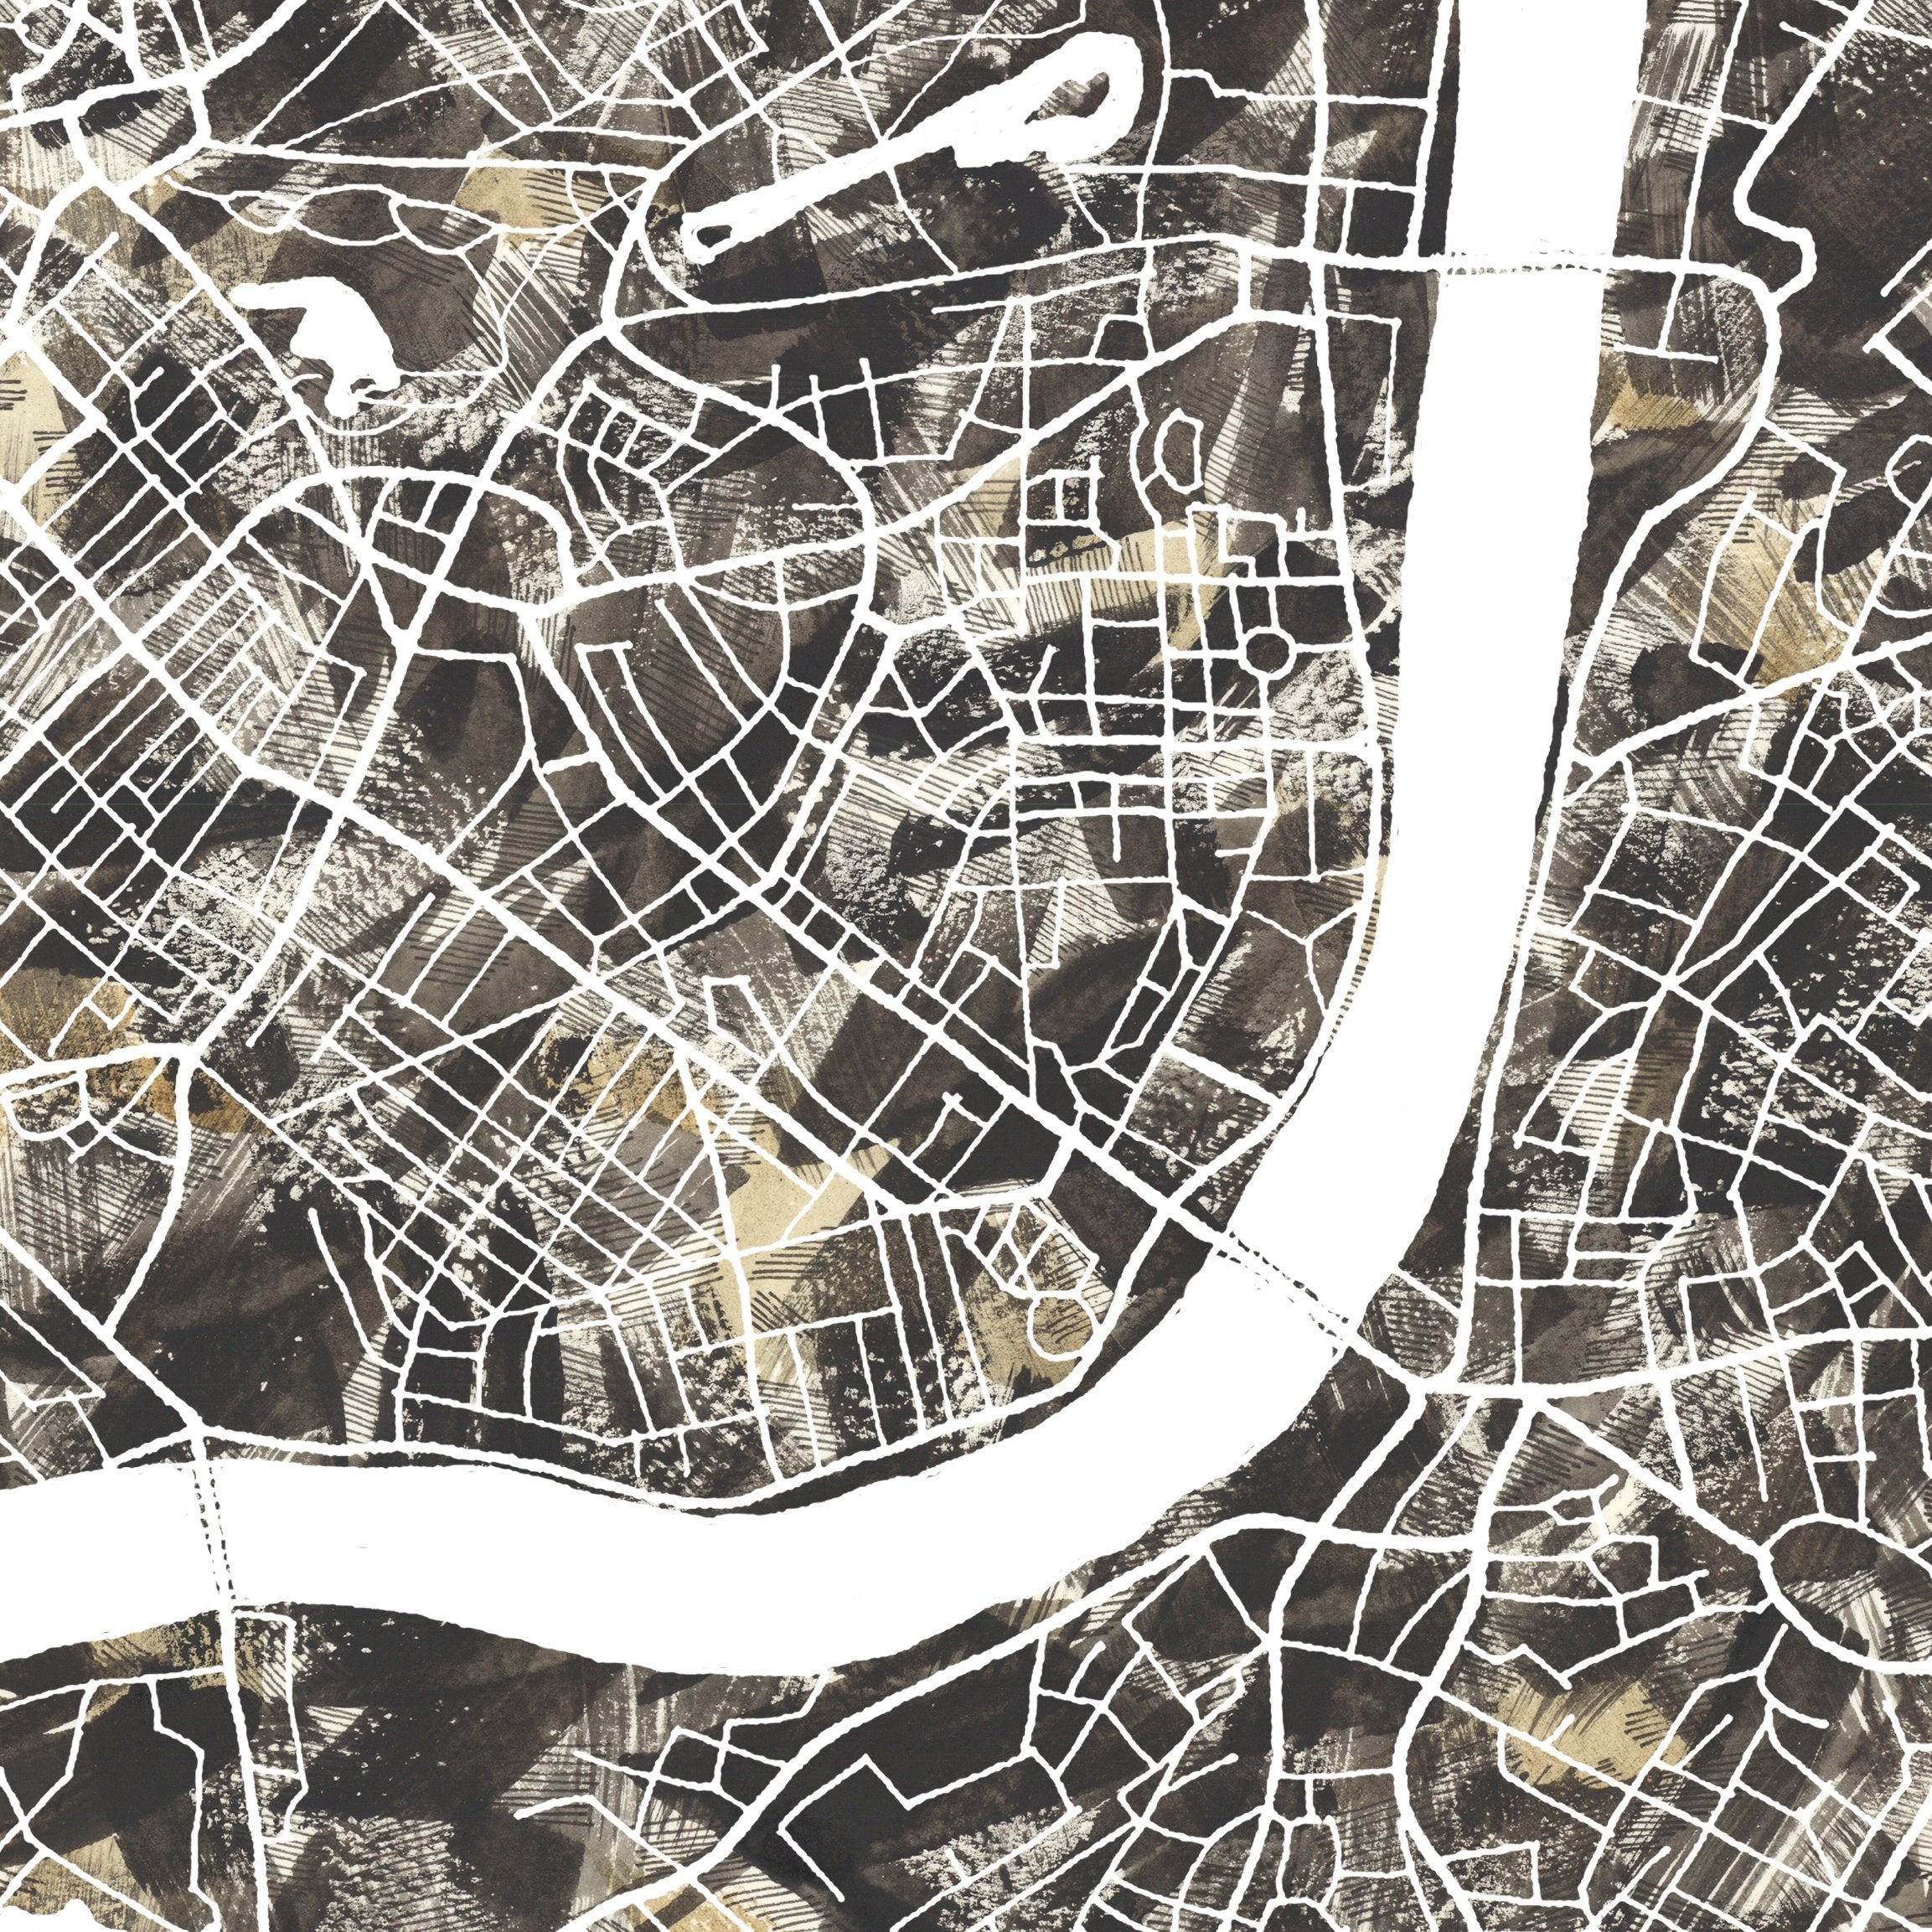 LONDON Urban Fabrics City Map: PRINT